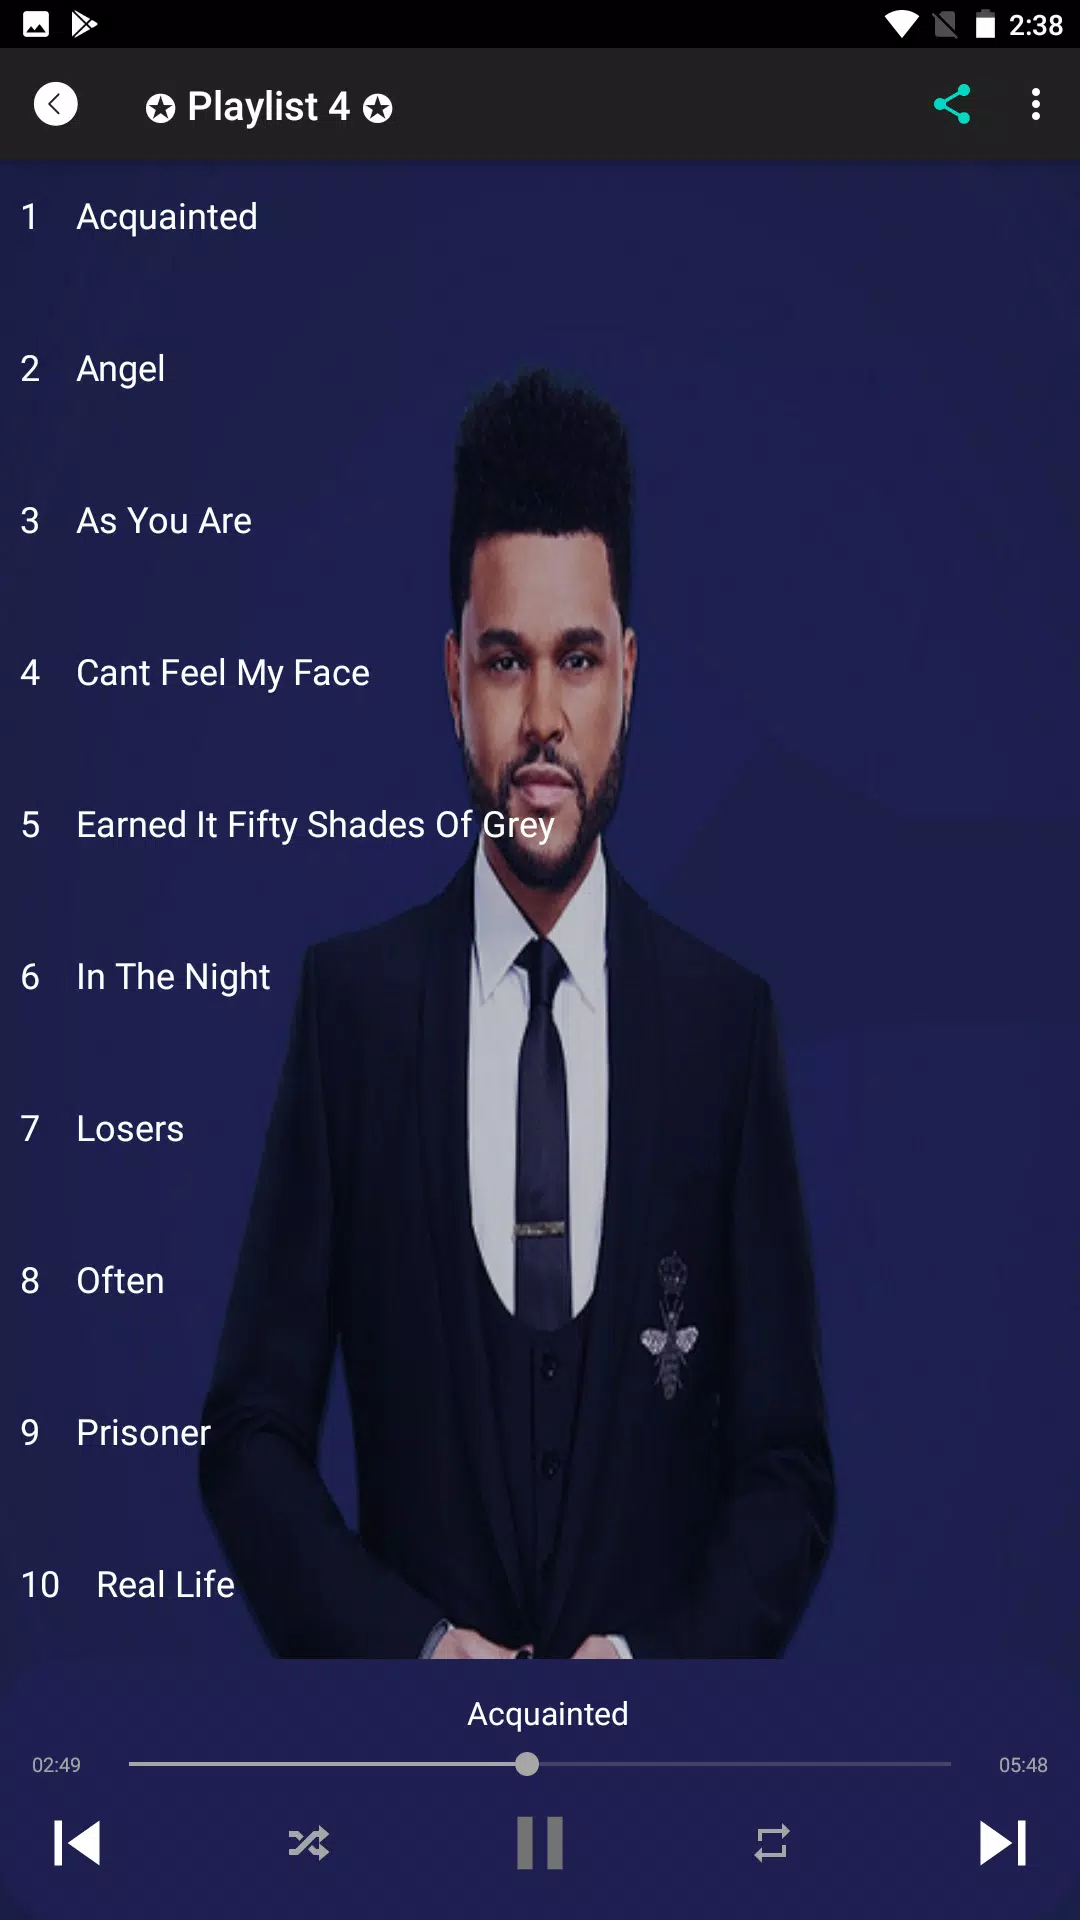 The Weeknd – Earned It Translations Versions